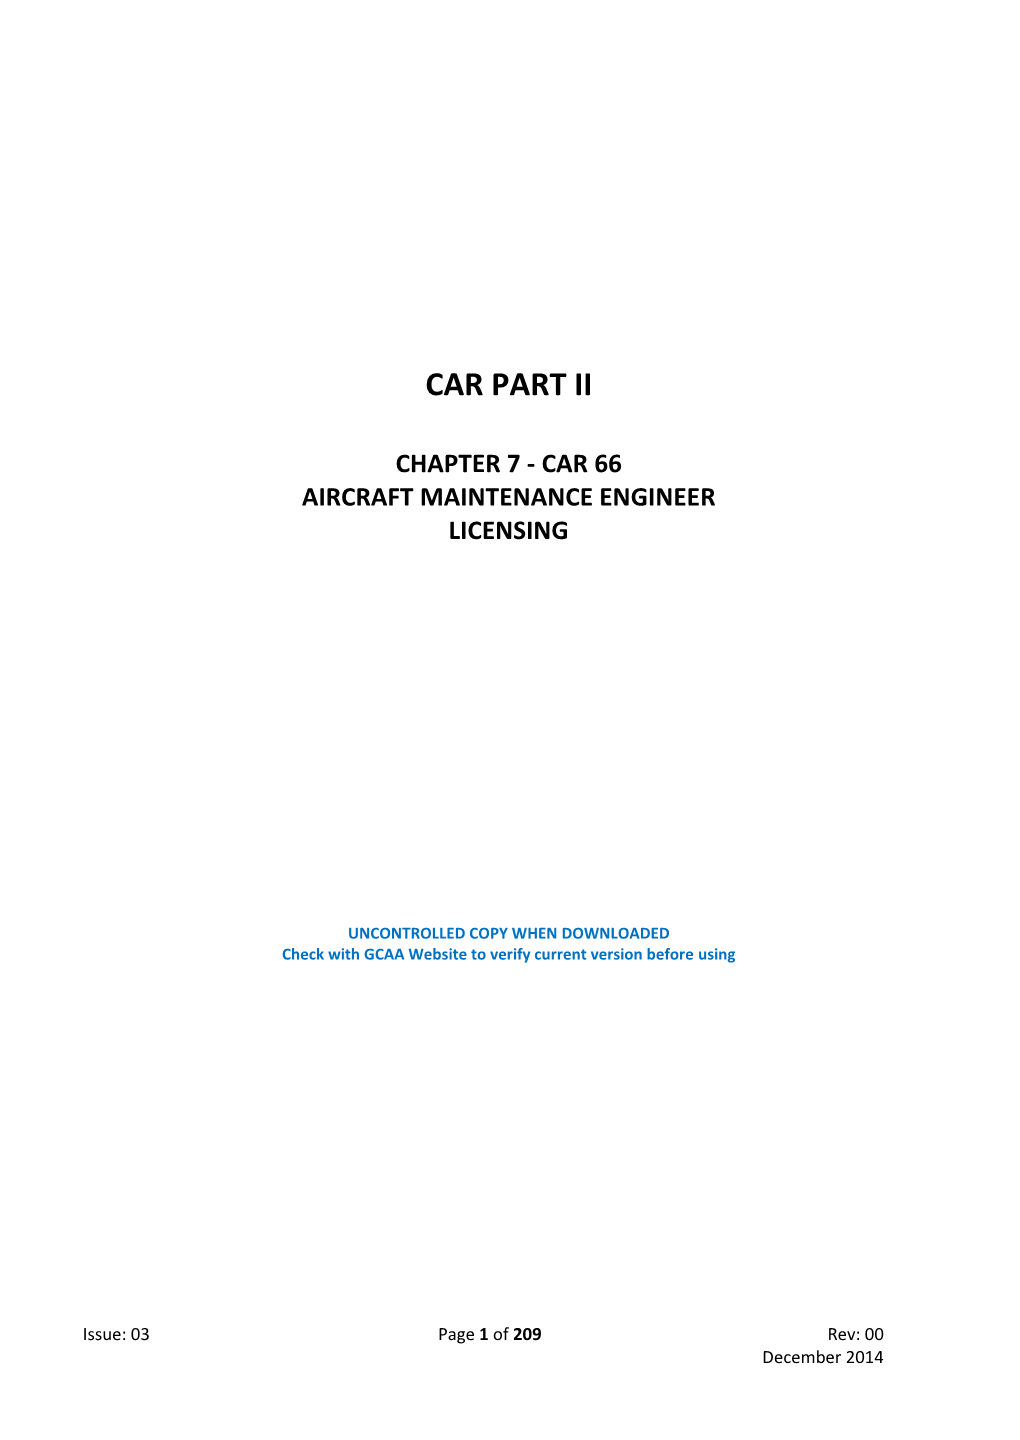 CAR Part II Chapter 7 Aircraft Maintenance Engineer Licensing Regulation